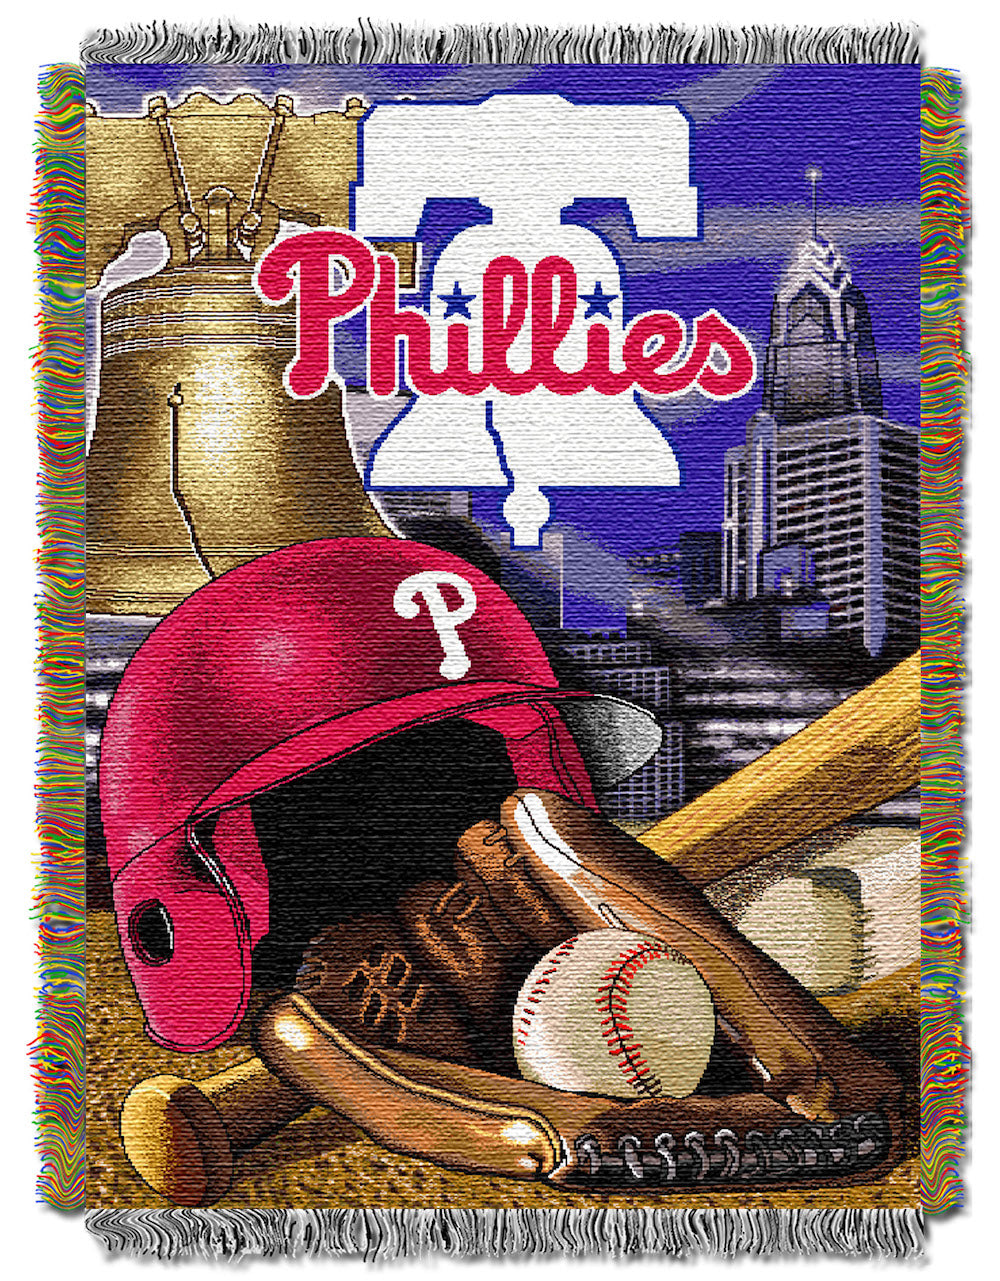 Philadelphia Phillies woven home field tapestry